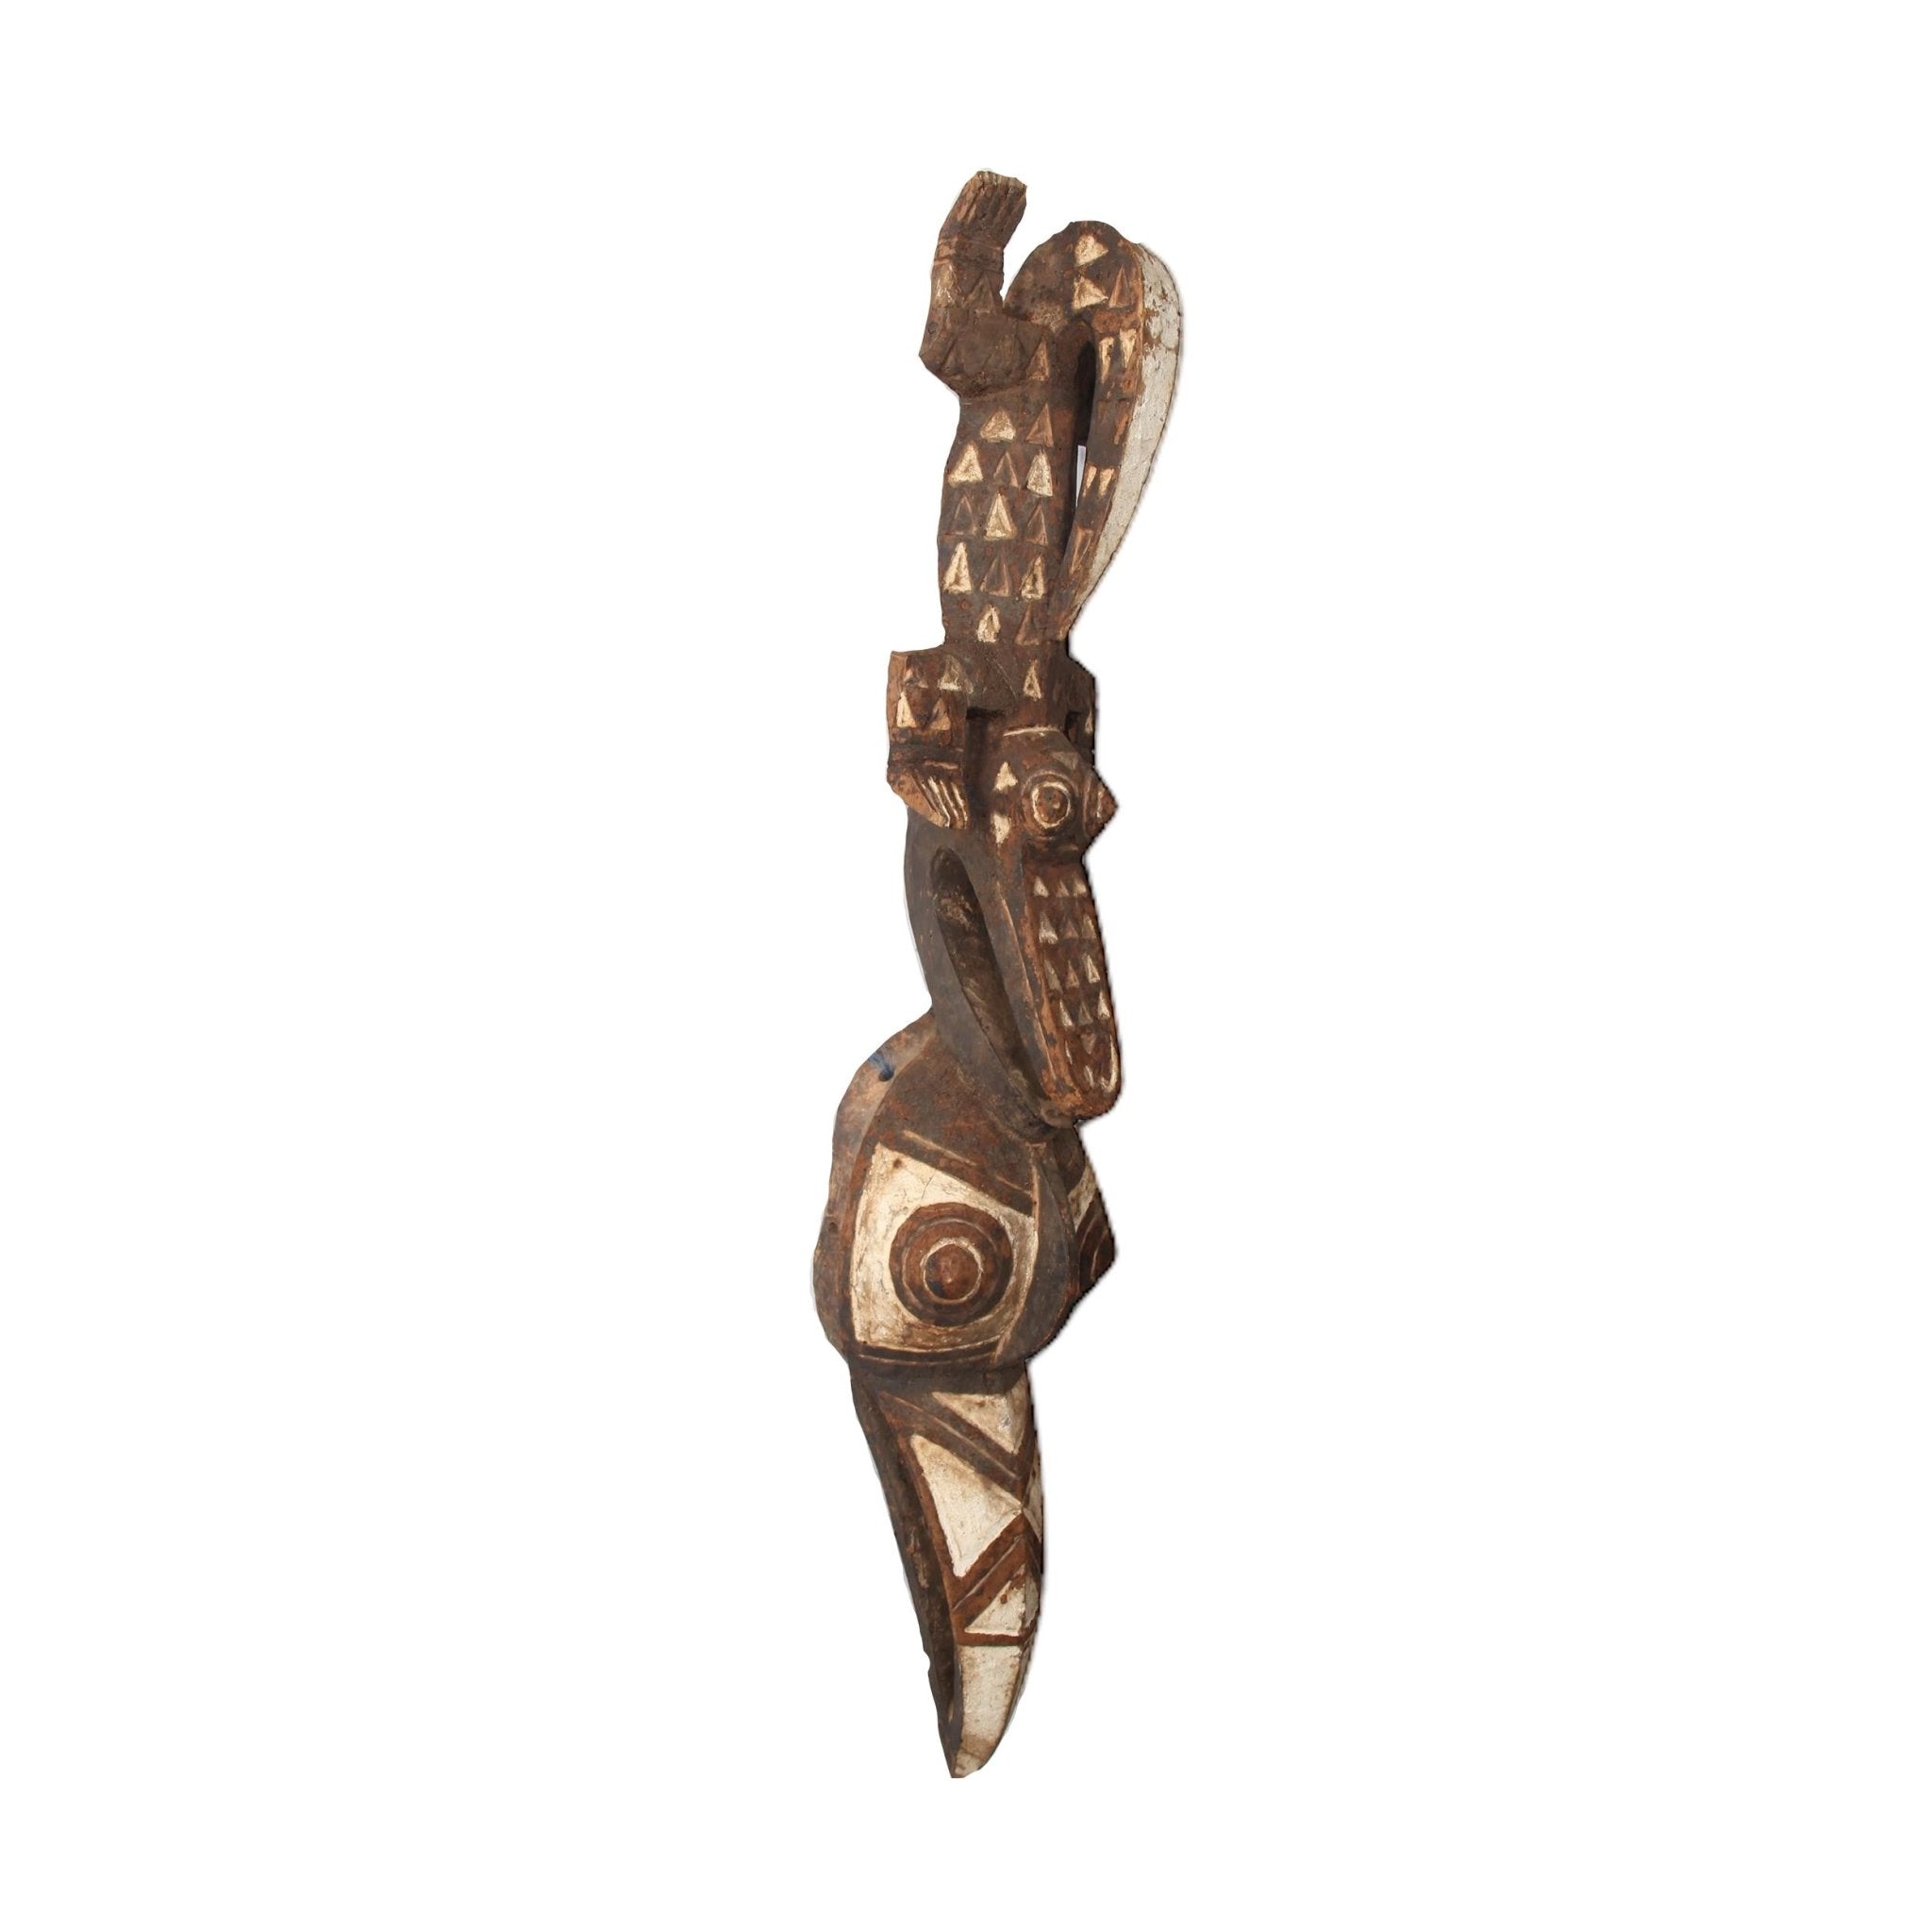 Bobo Tribe Mask ~37.4" Tall - African Angel Art